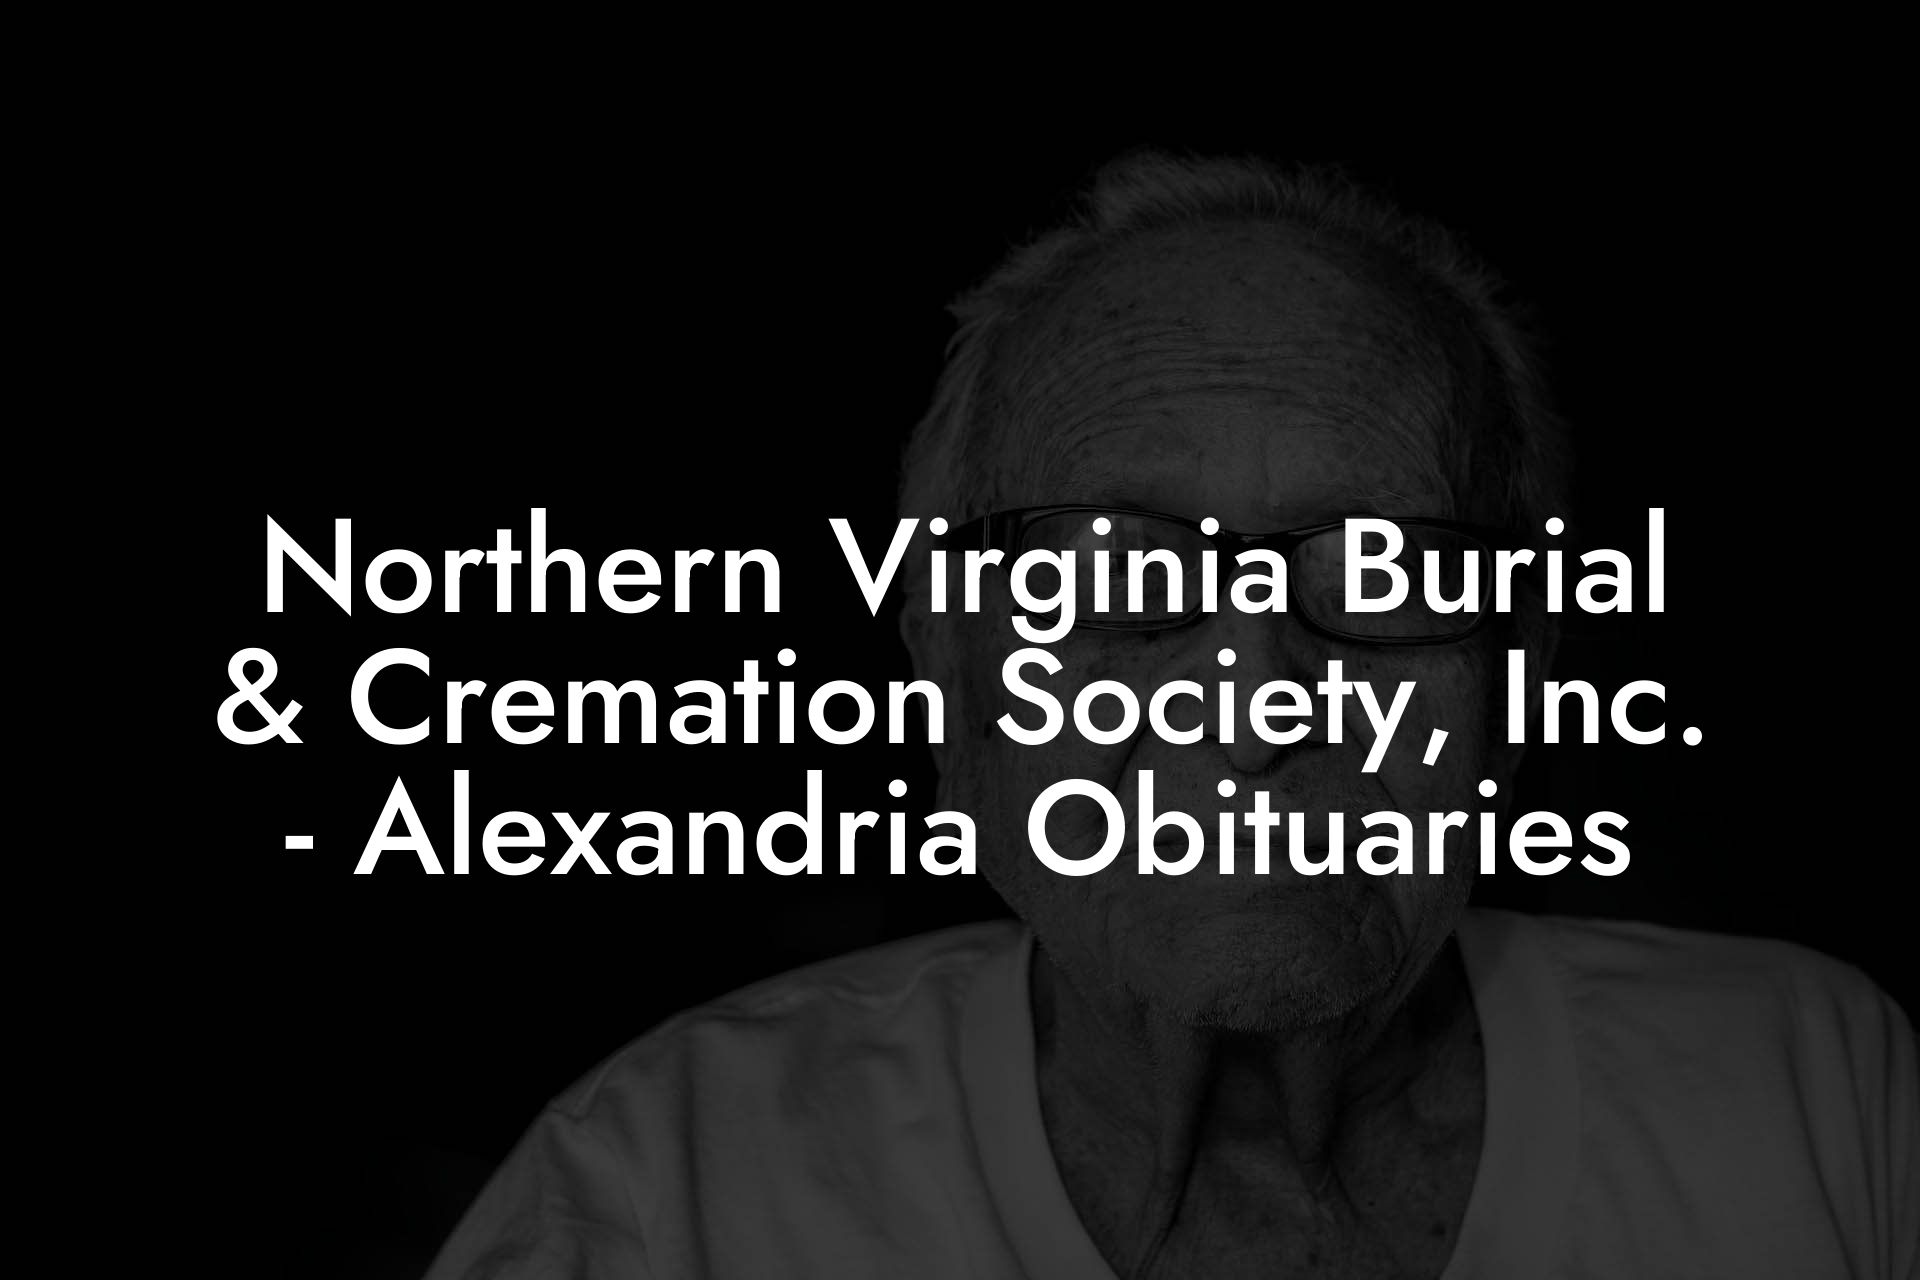 Northern Virginia Burial & Cremation Society, Inc. - Alexandria Obituaries